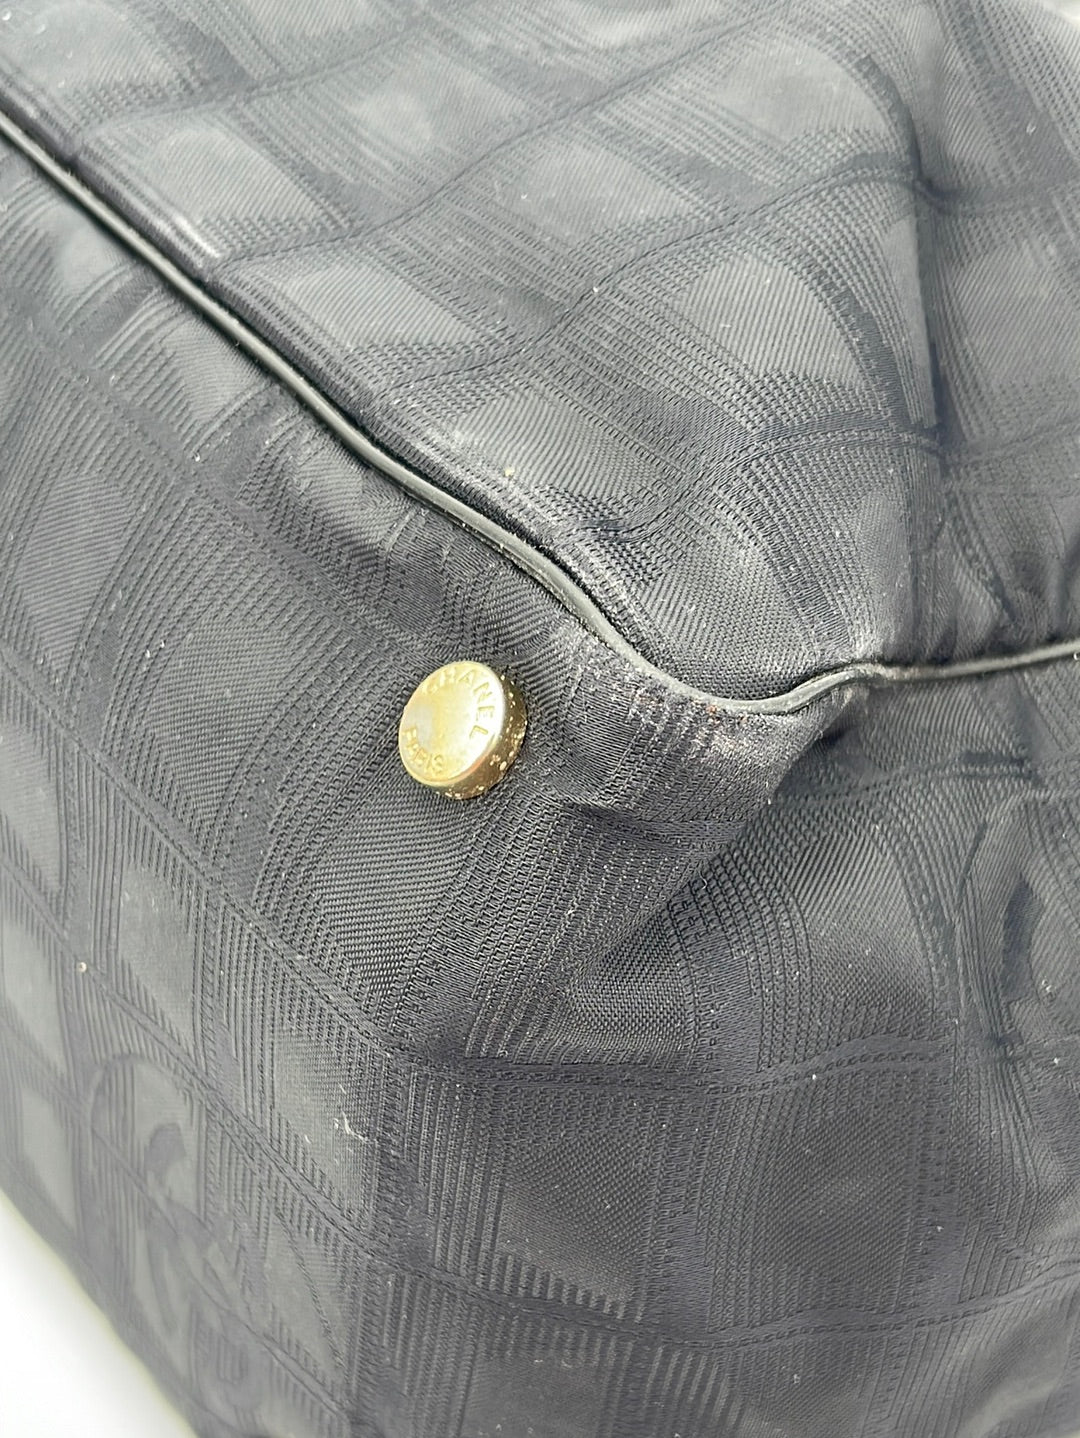 31 crossbody bag Chanel Black in Plastic - 33409736